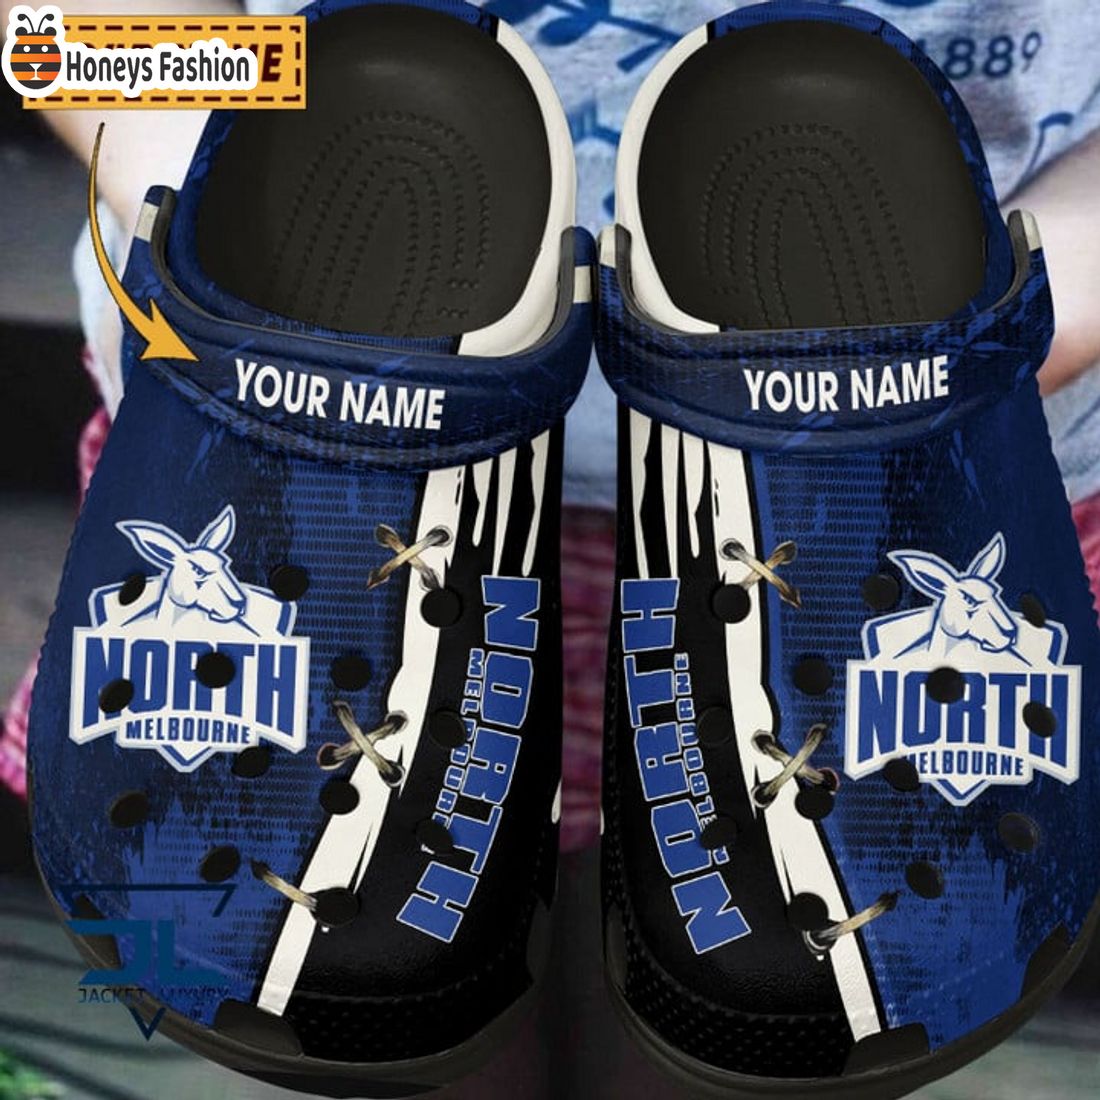 HOT North Melbourne Football Club Custom Name Crocs Clog Shoes